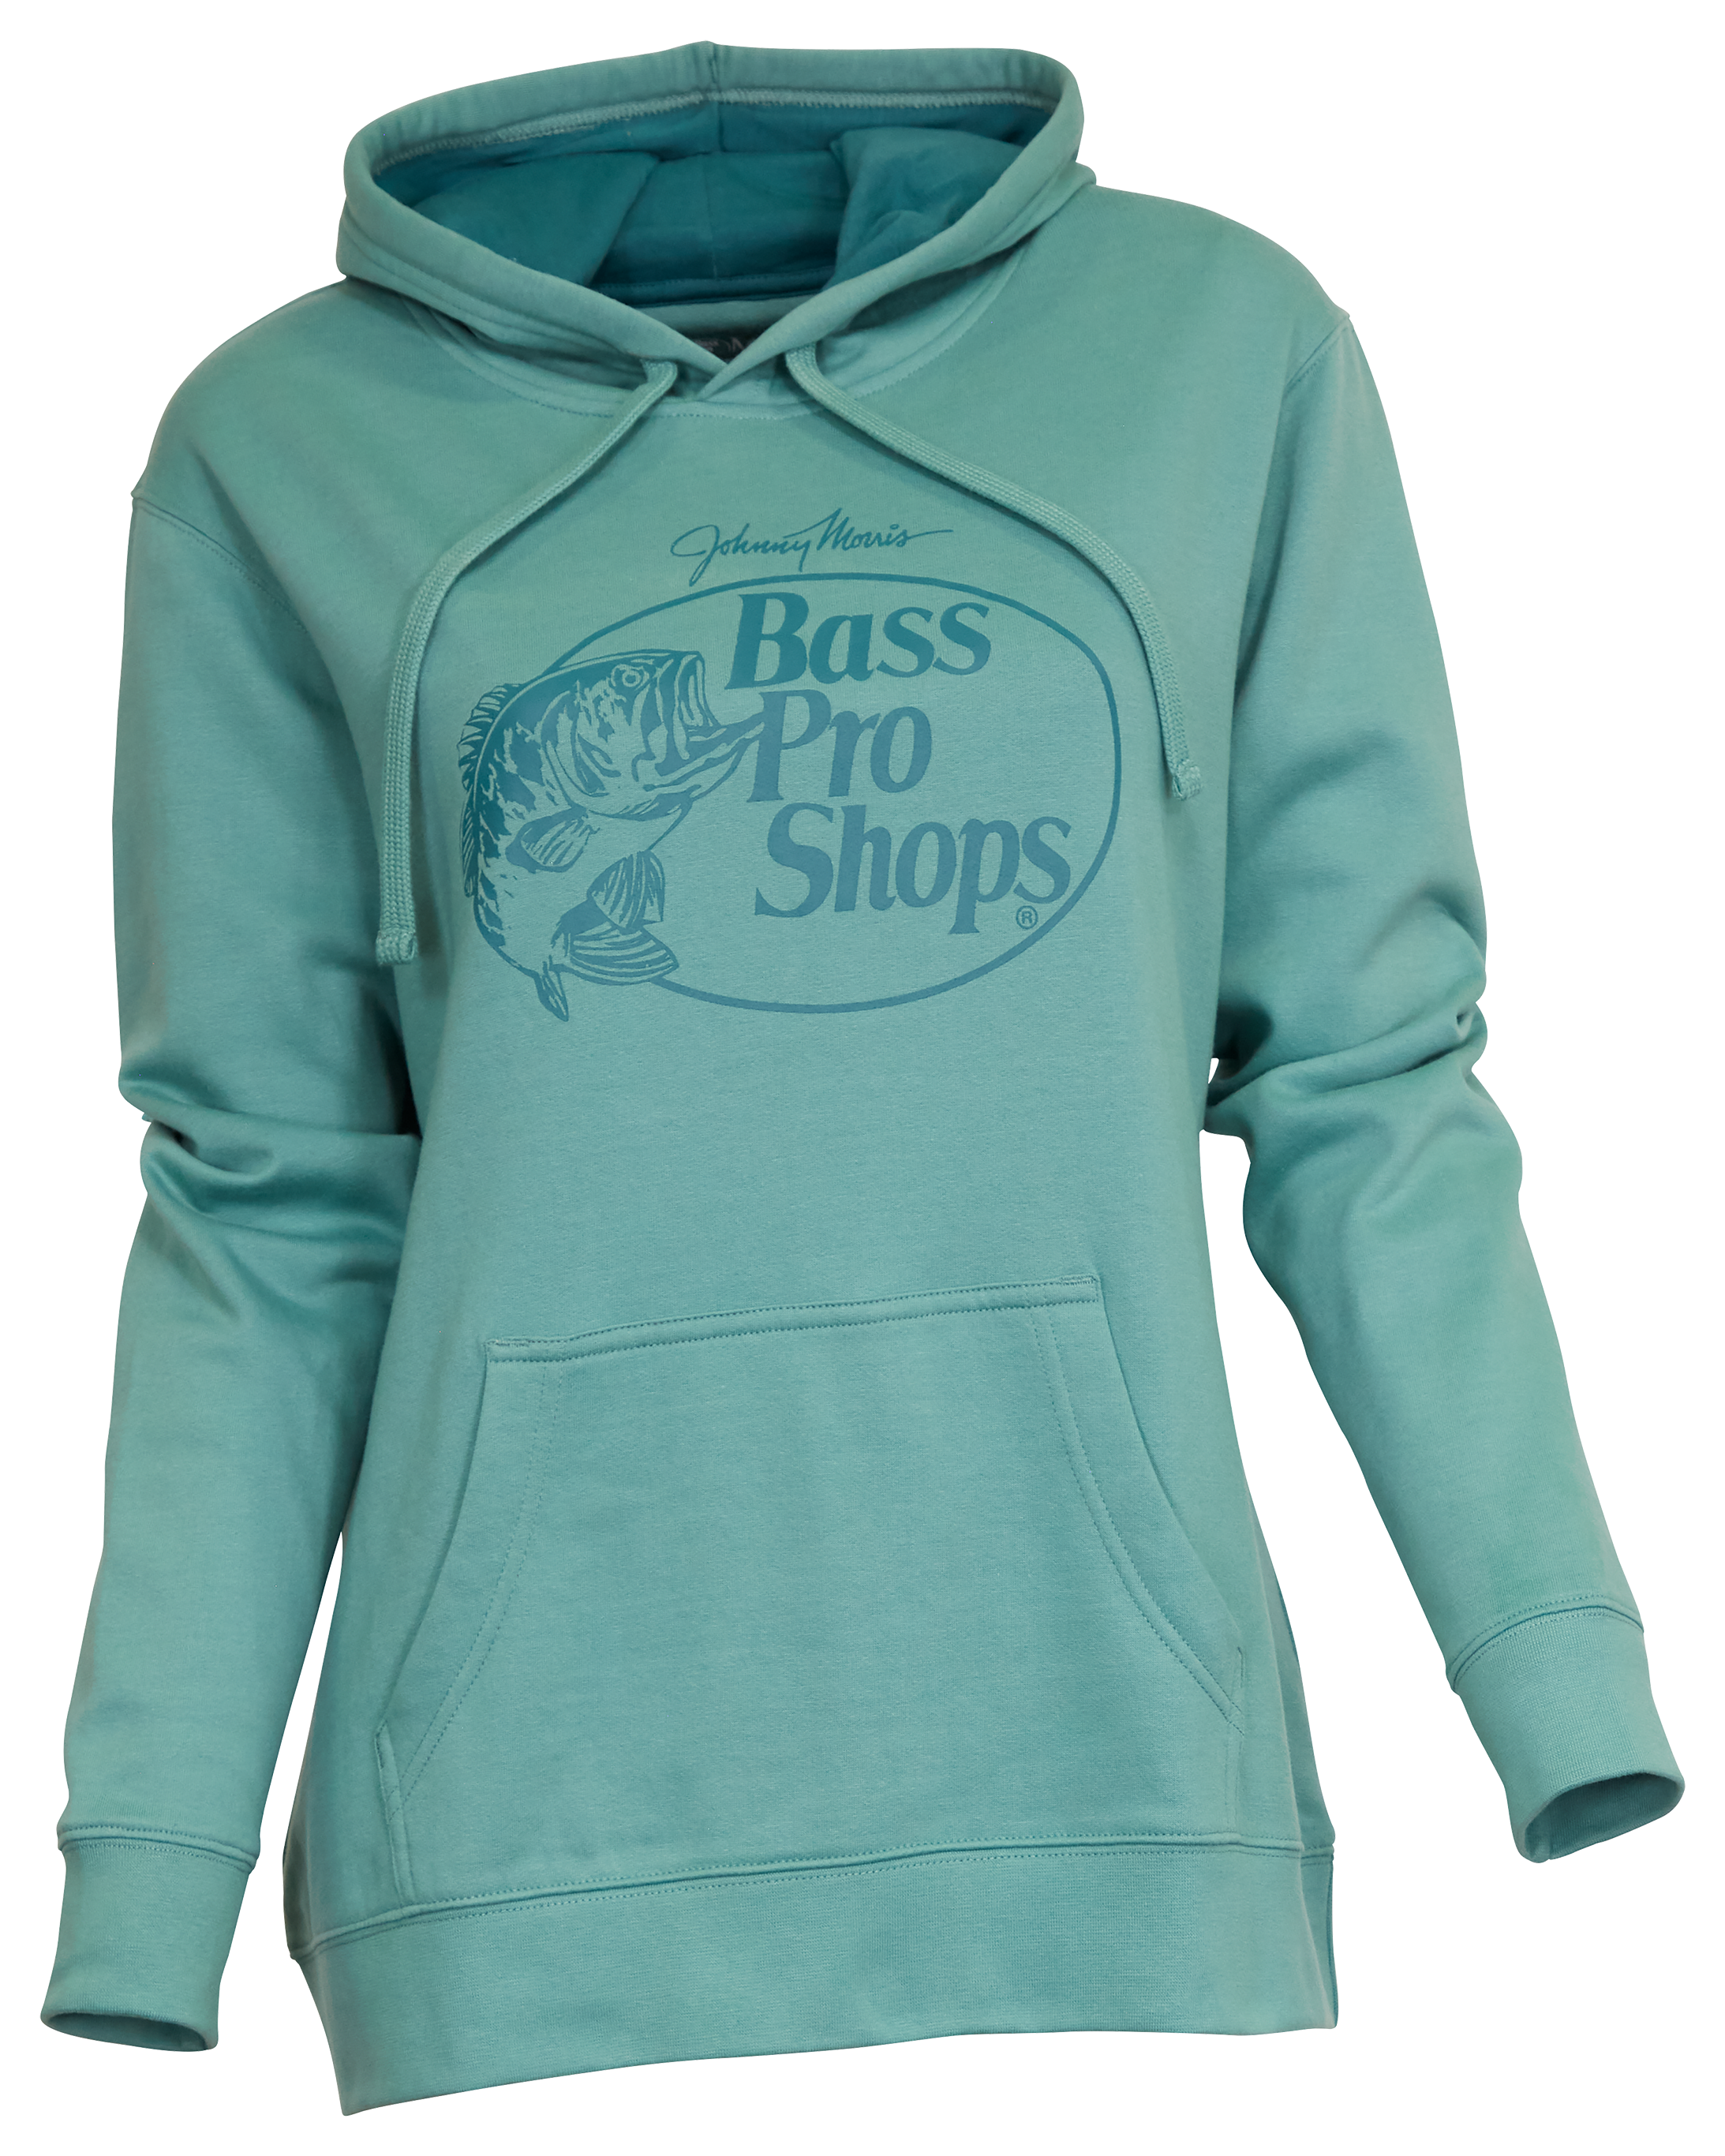 Bass Pro Shops Original Logo Long-Sleeve Hoodie for Ladies